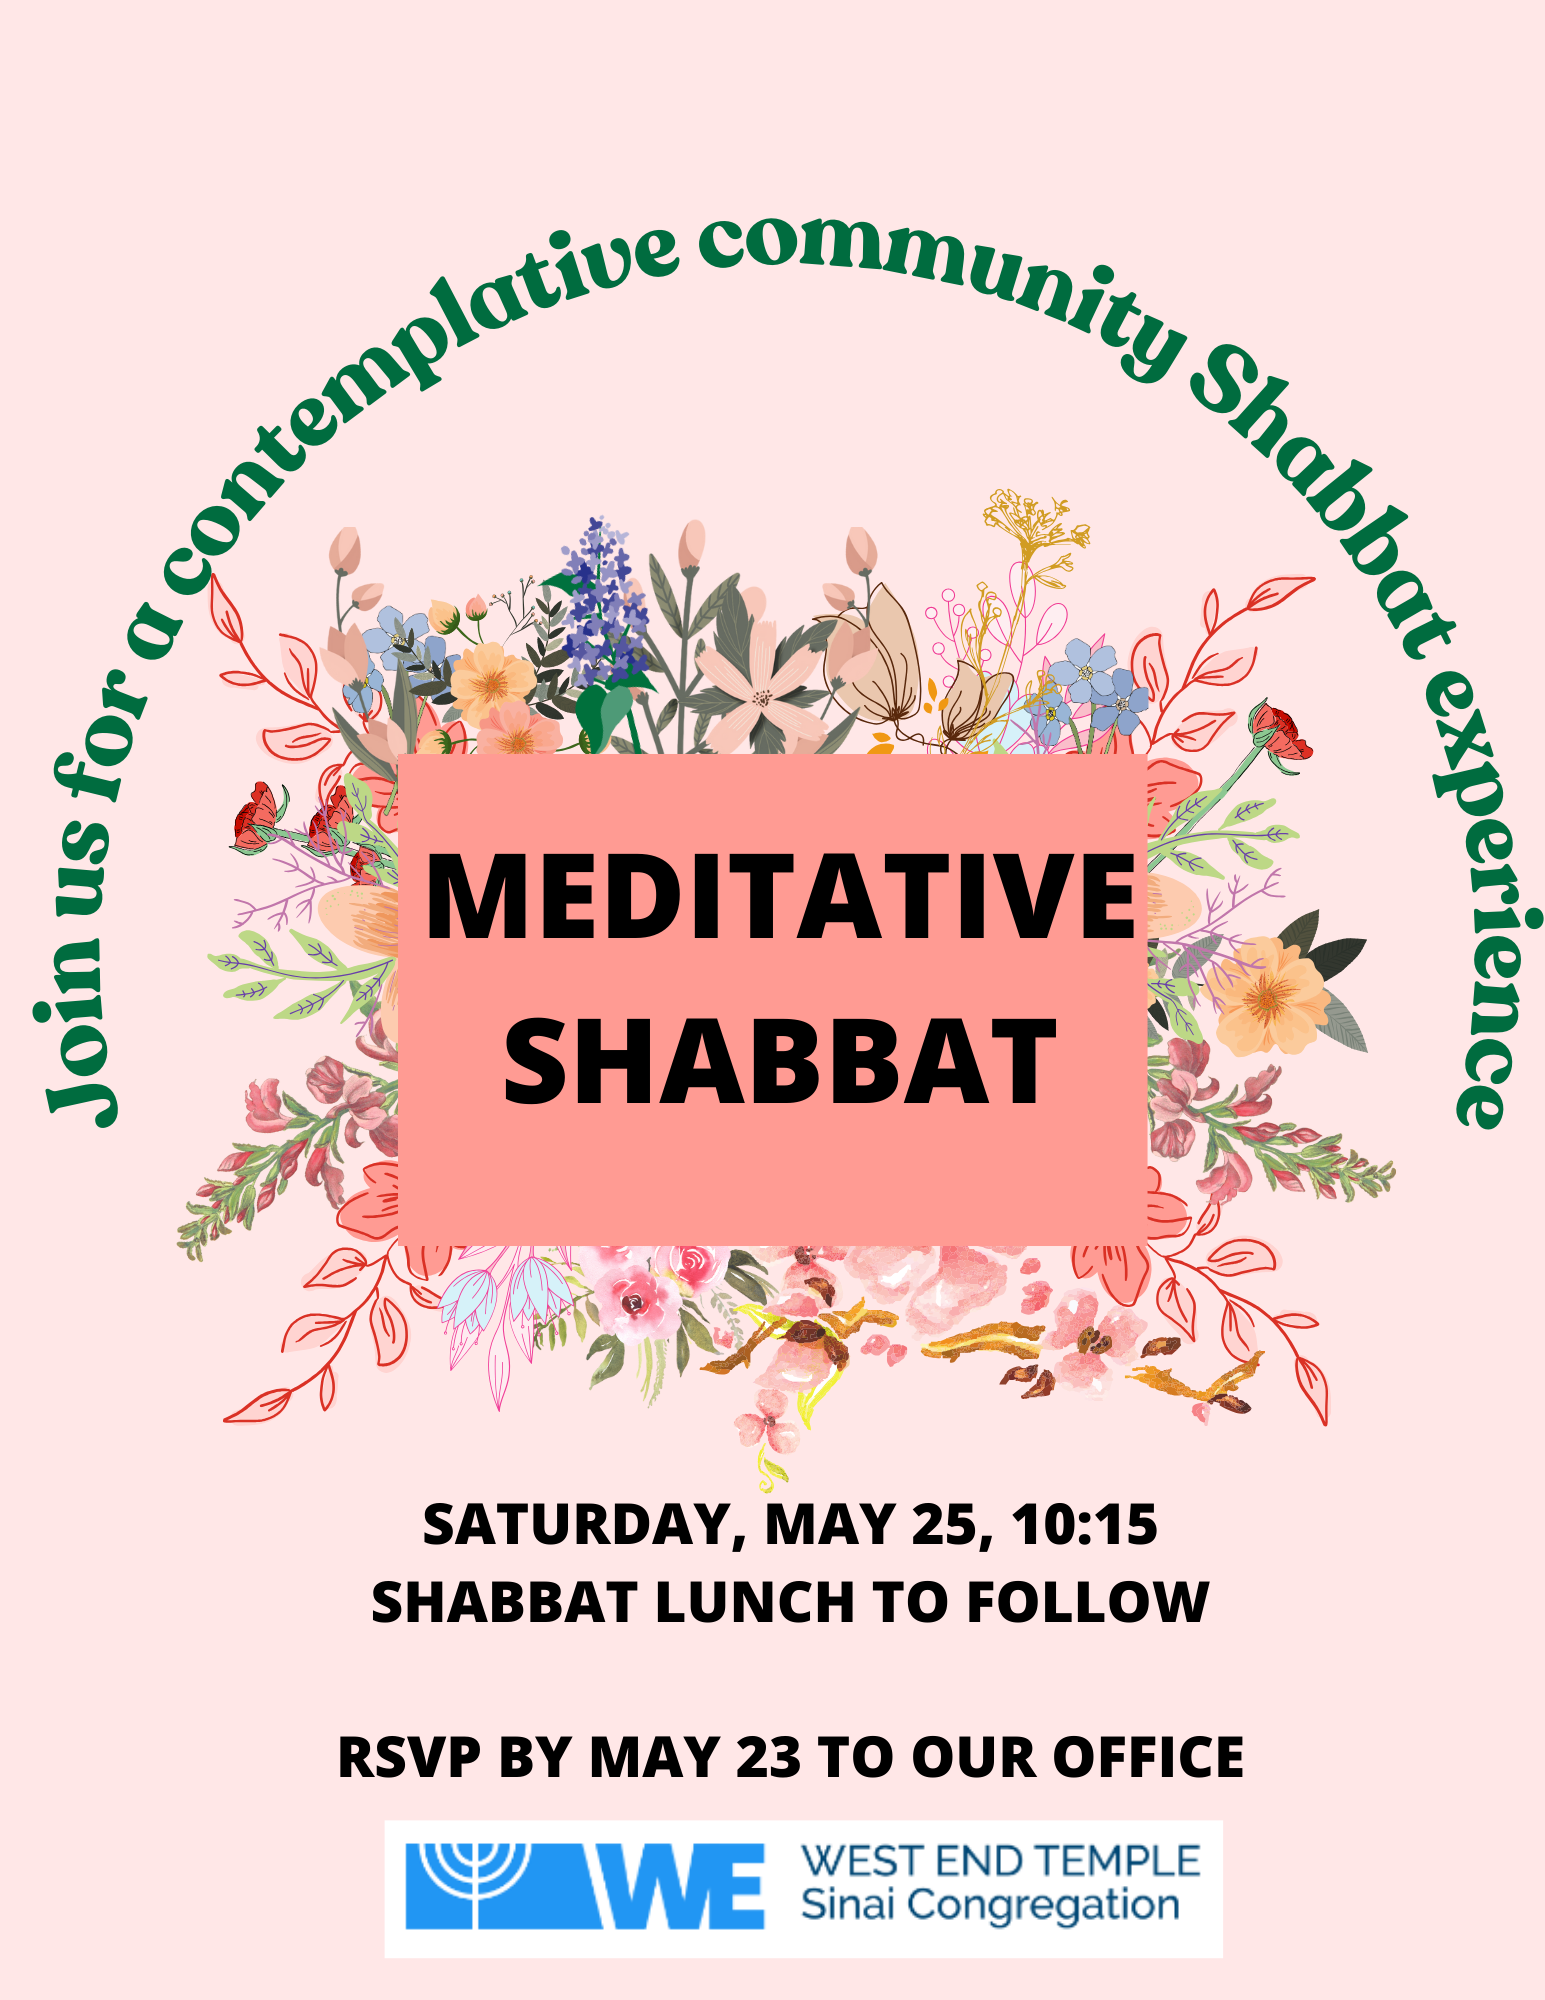 Meditative Shabbat Service